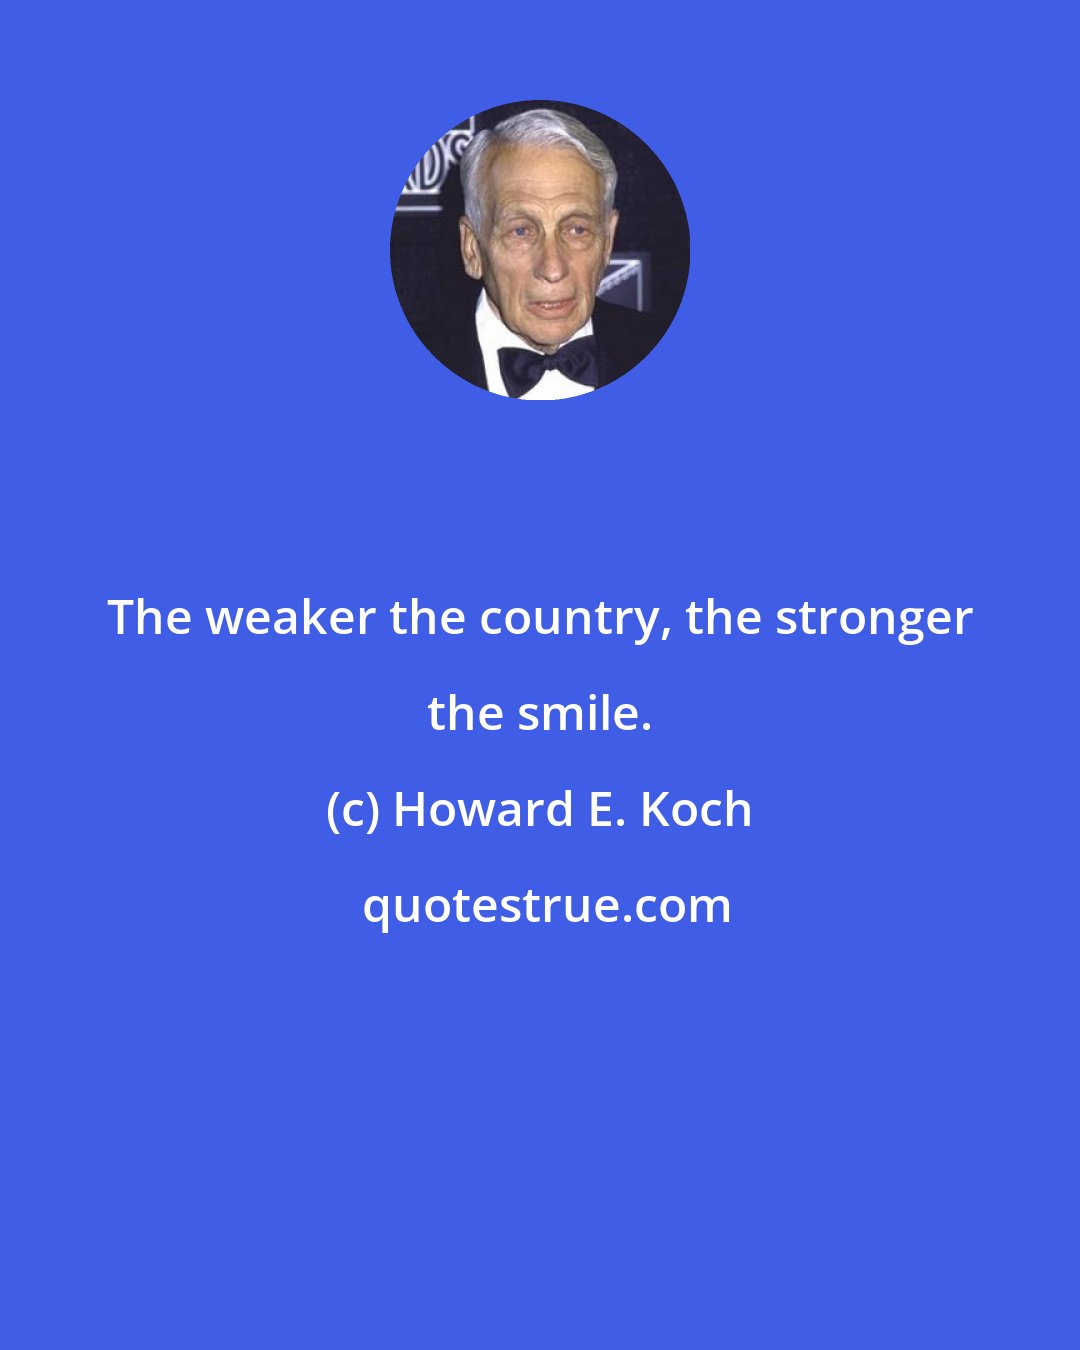 Howard E. Koch: The weaker the country, the stronger the smile.